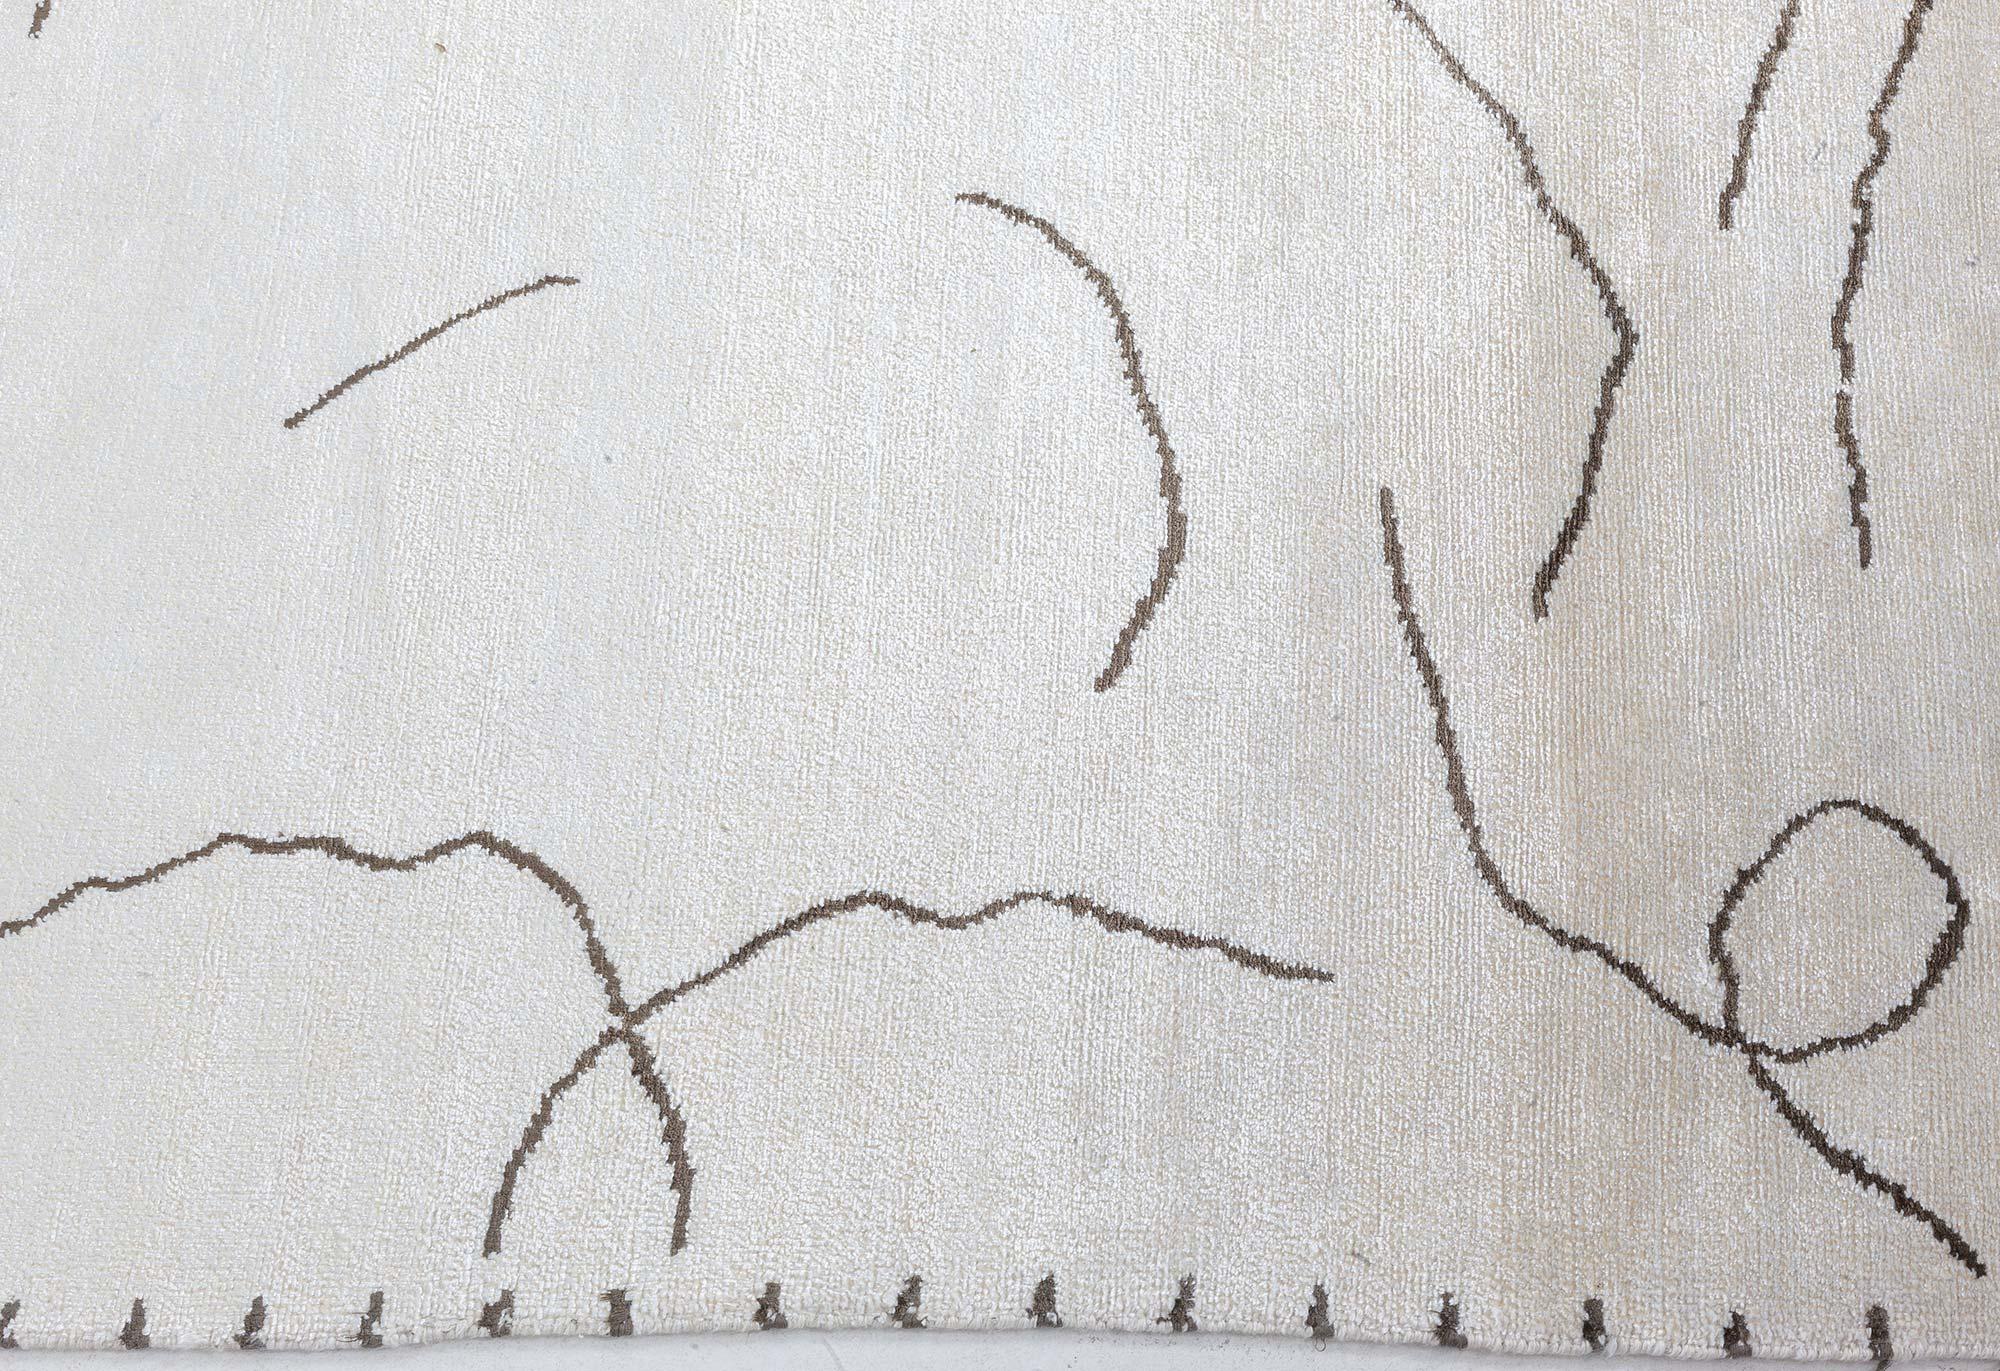 Contemporary Cocteau Hand Knotted Silk Rug by Doris Leslie Blau
Size: 10'3